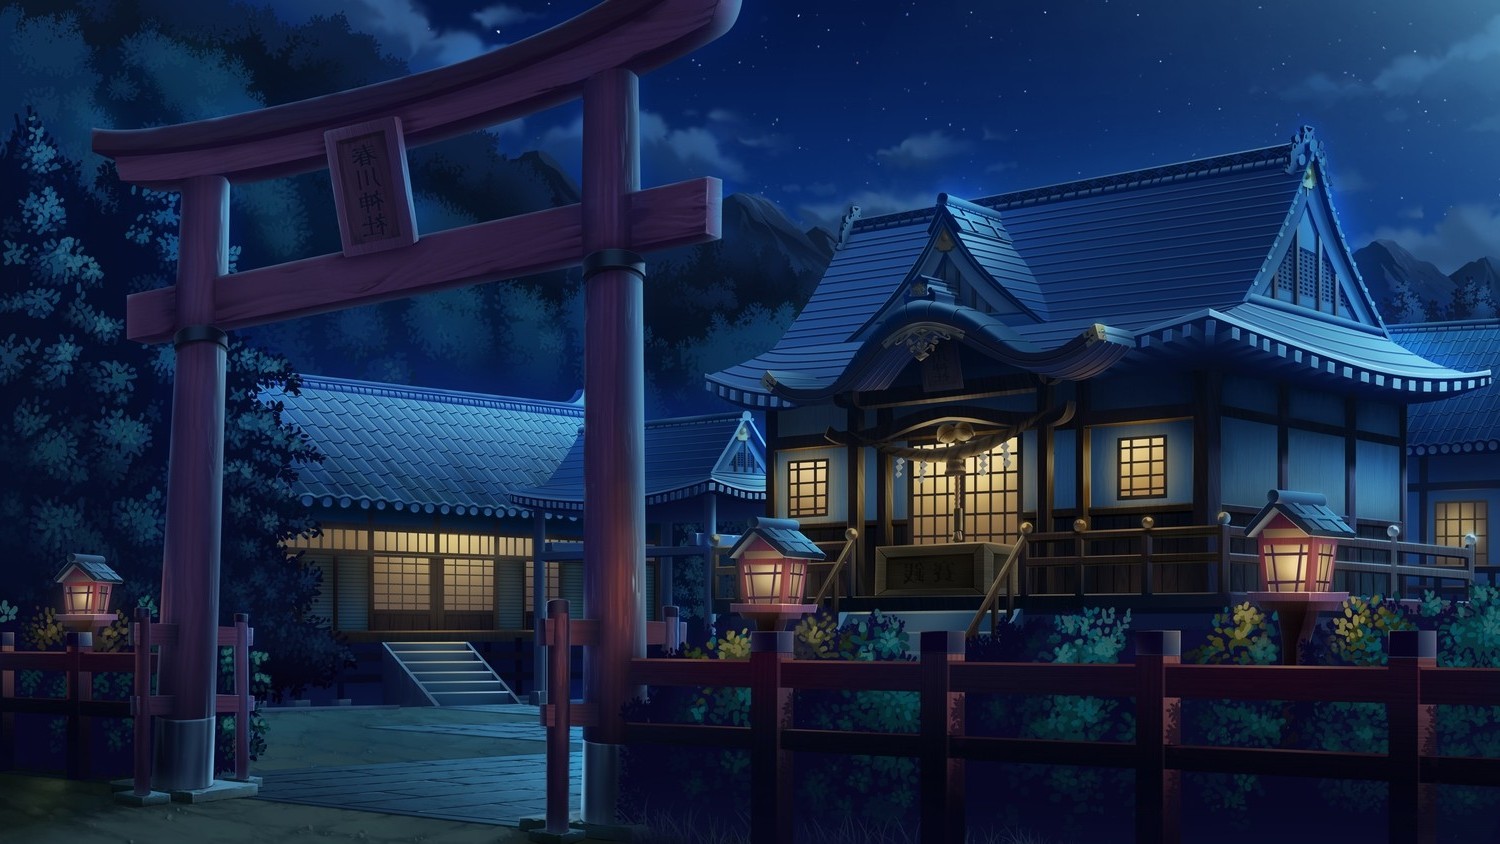 58647-anime-torii-artwork-house-lantern-fence-lights-night-Asian_architecture.jpg